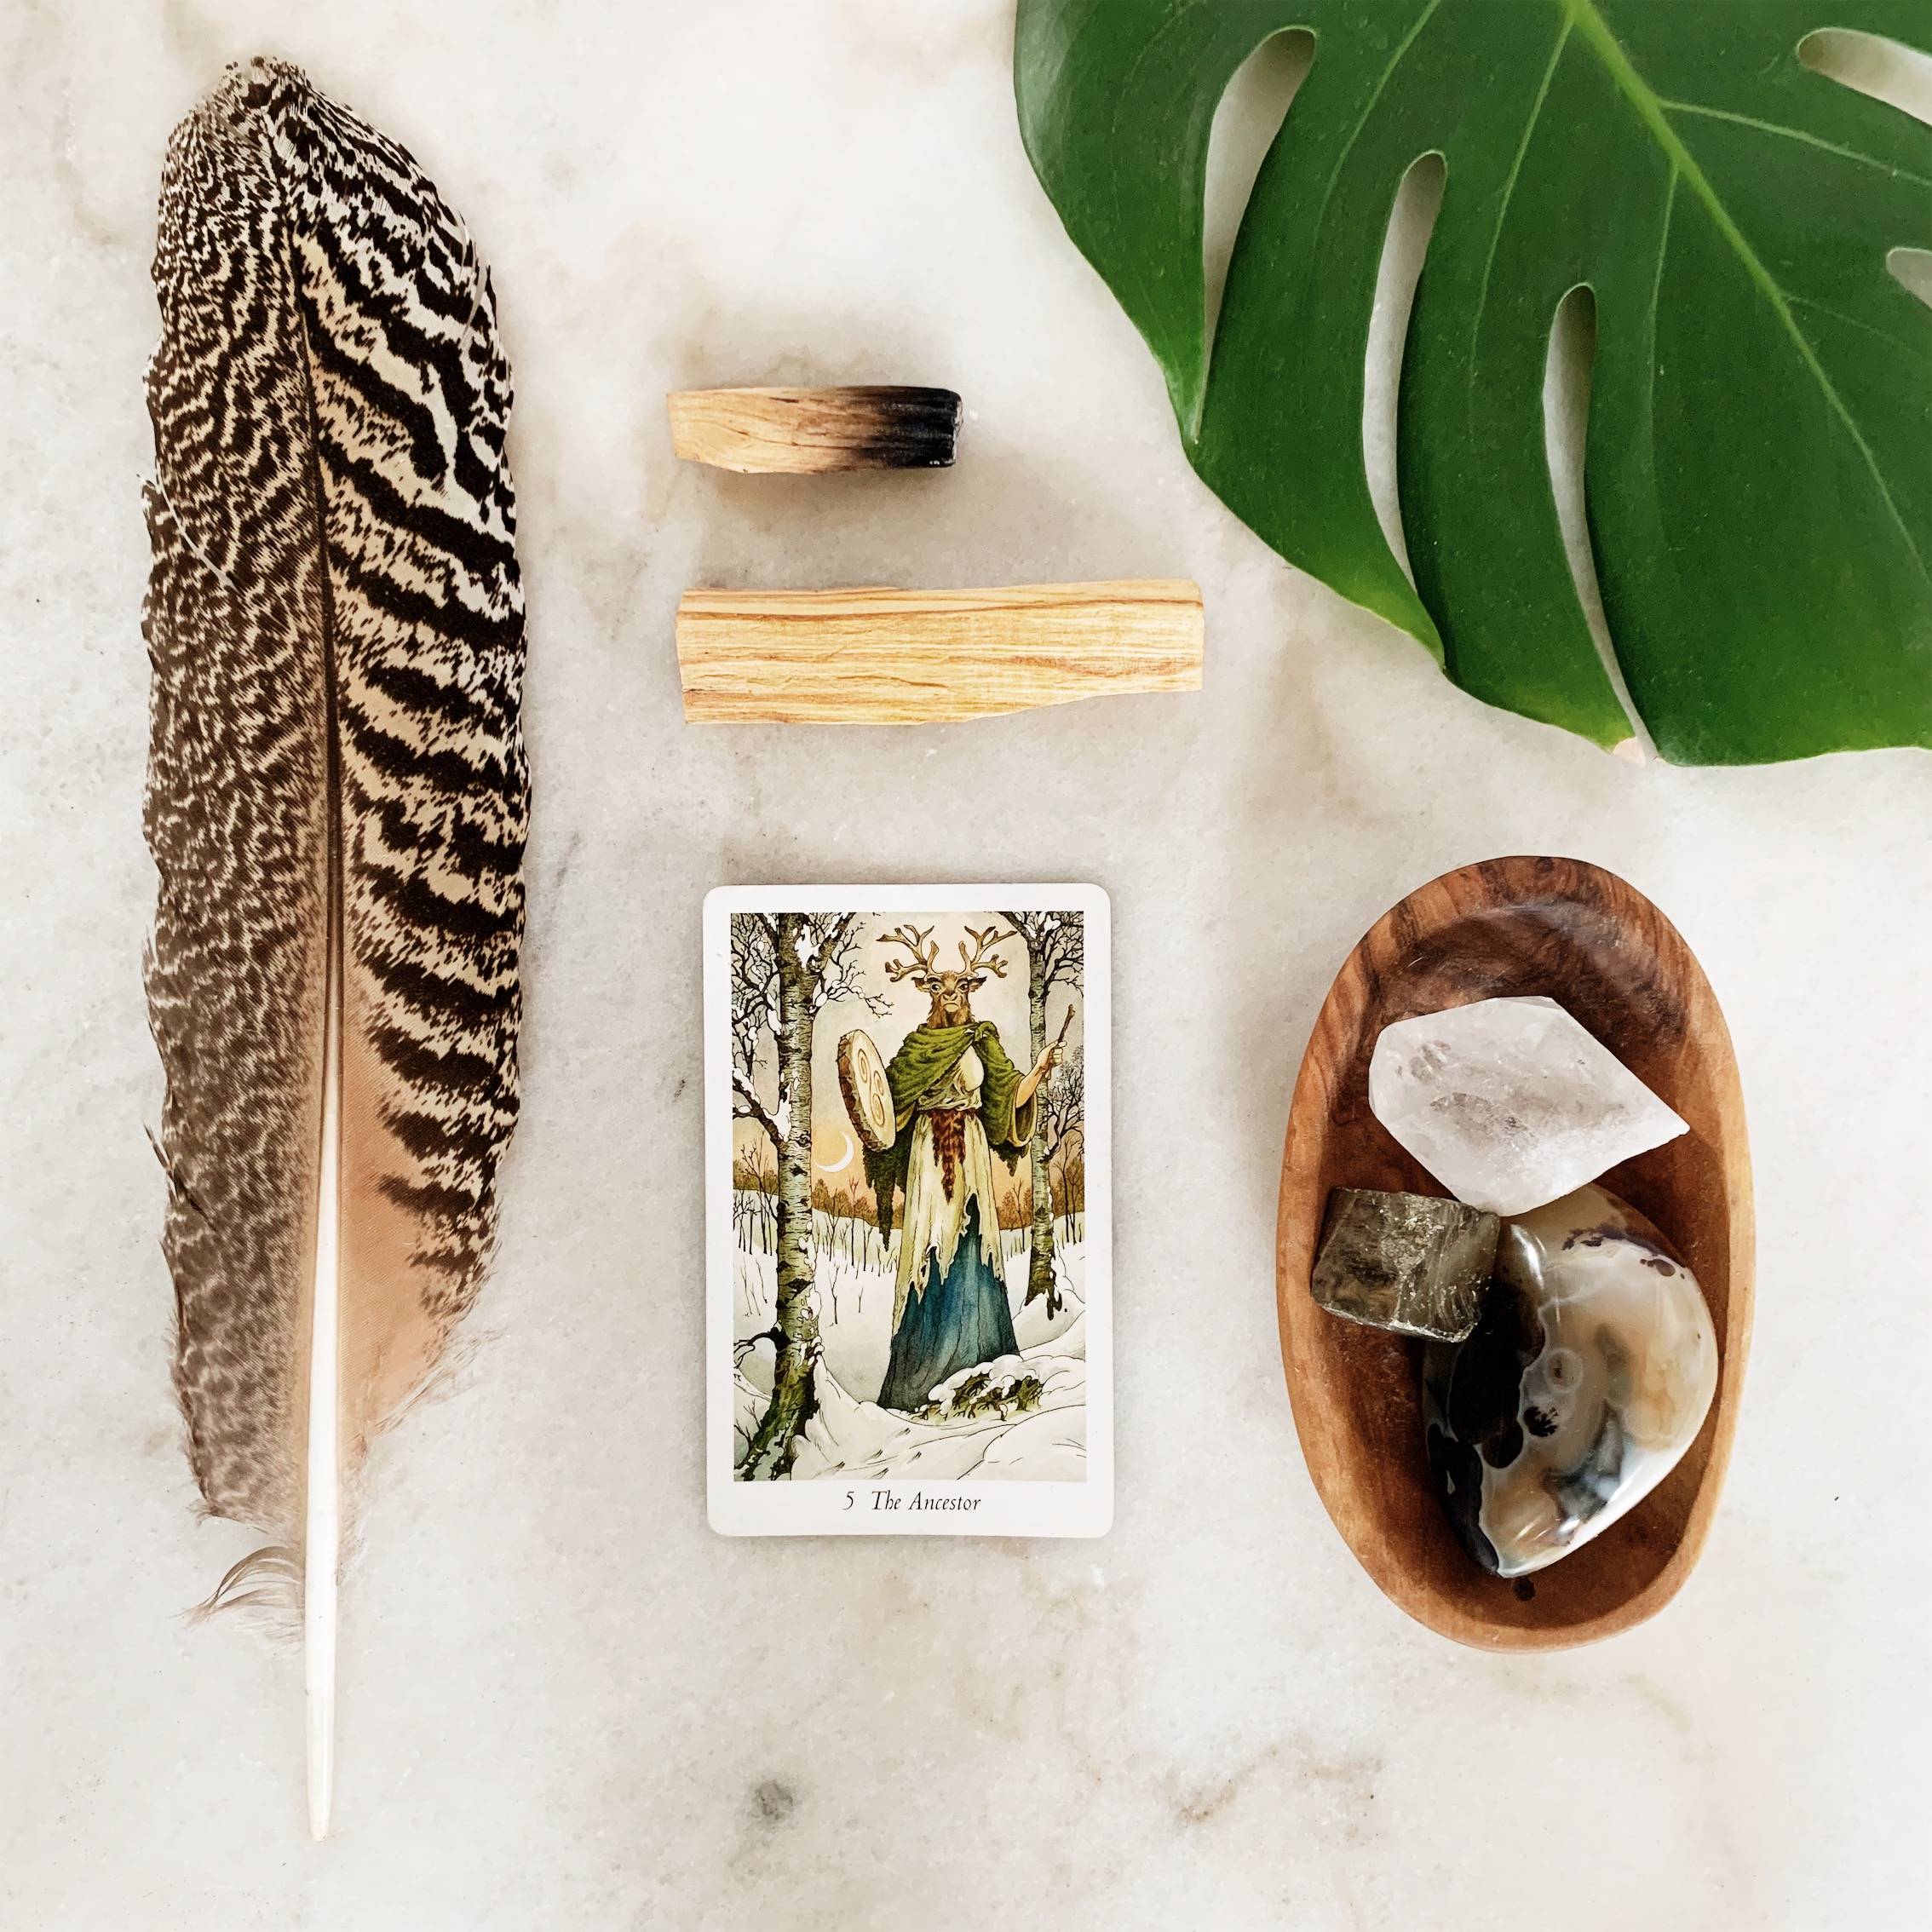 Tarot card, palo santo, crystals, and a turkey feather